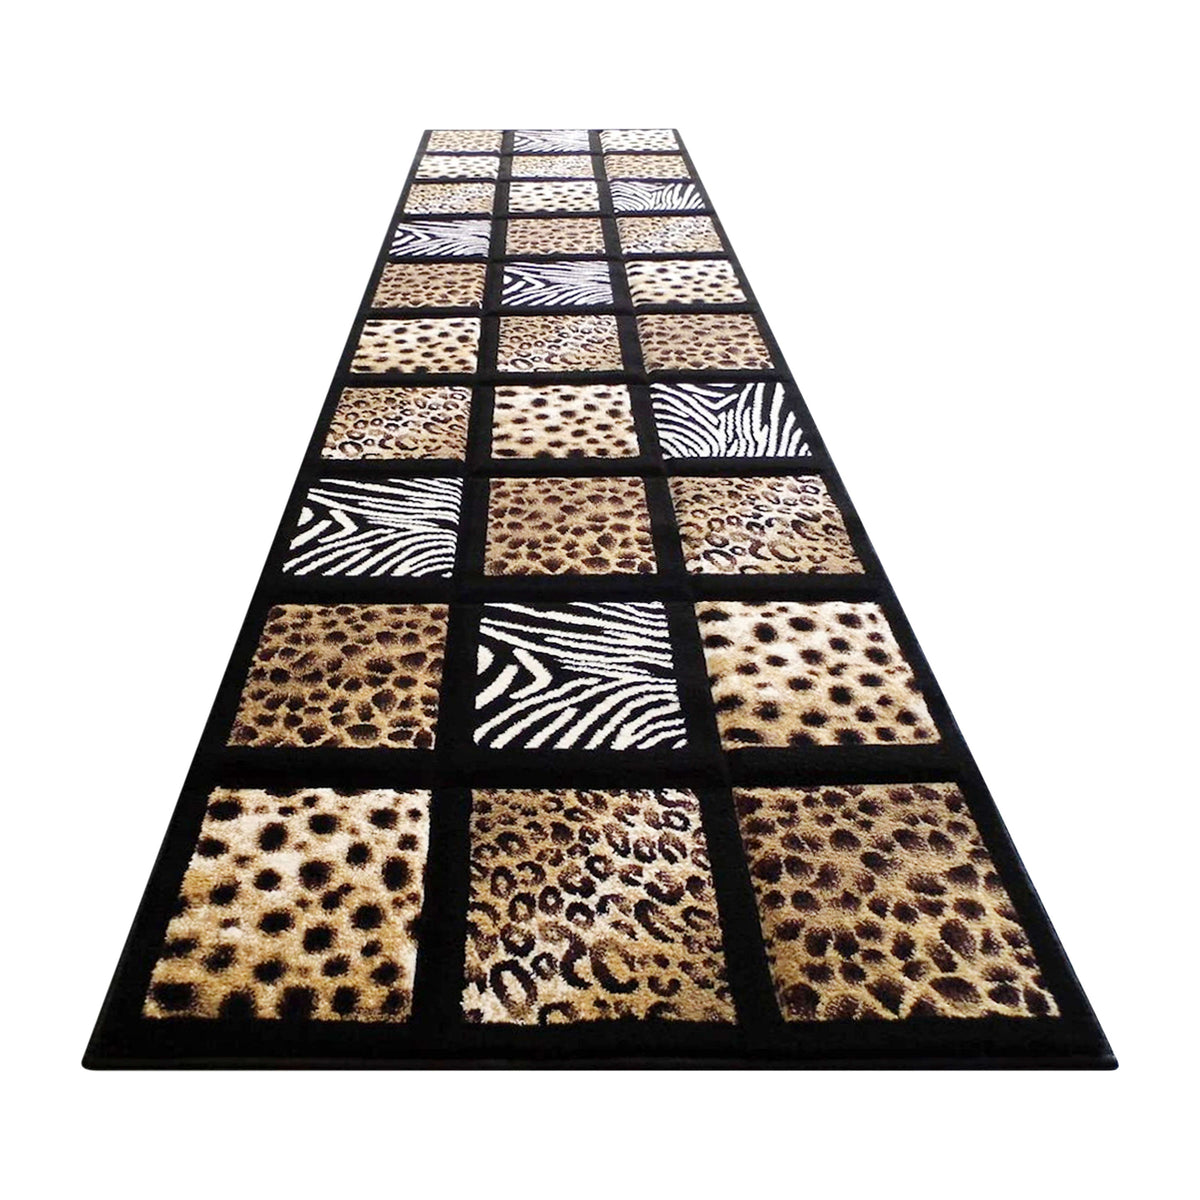 3' x 10' |#| Wildlife Animal Print Area Rug with Raised Squares - Black Background - 3' x 10'